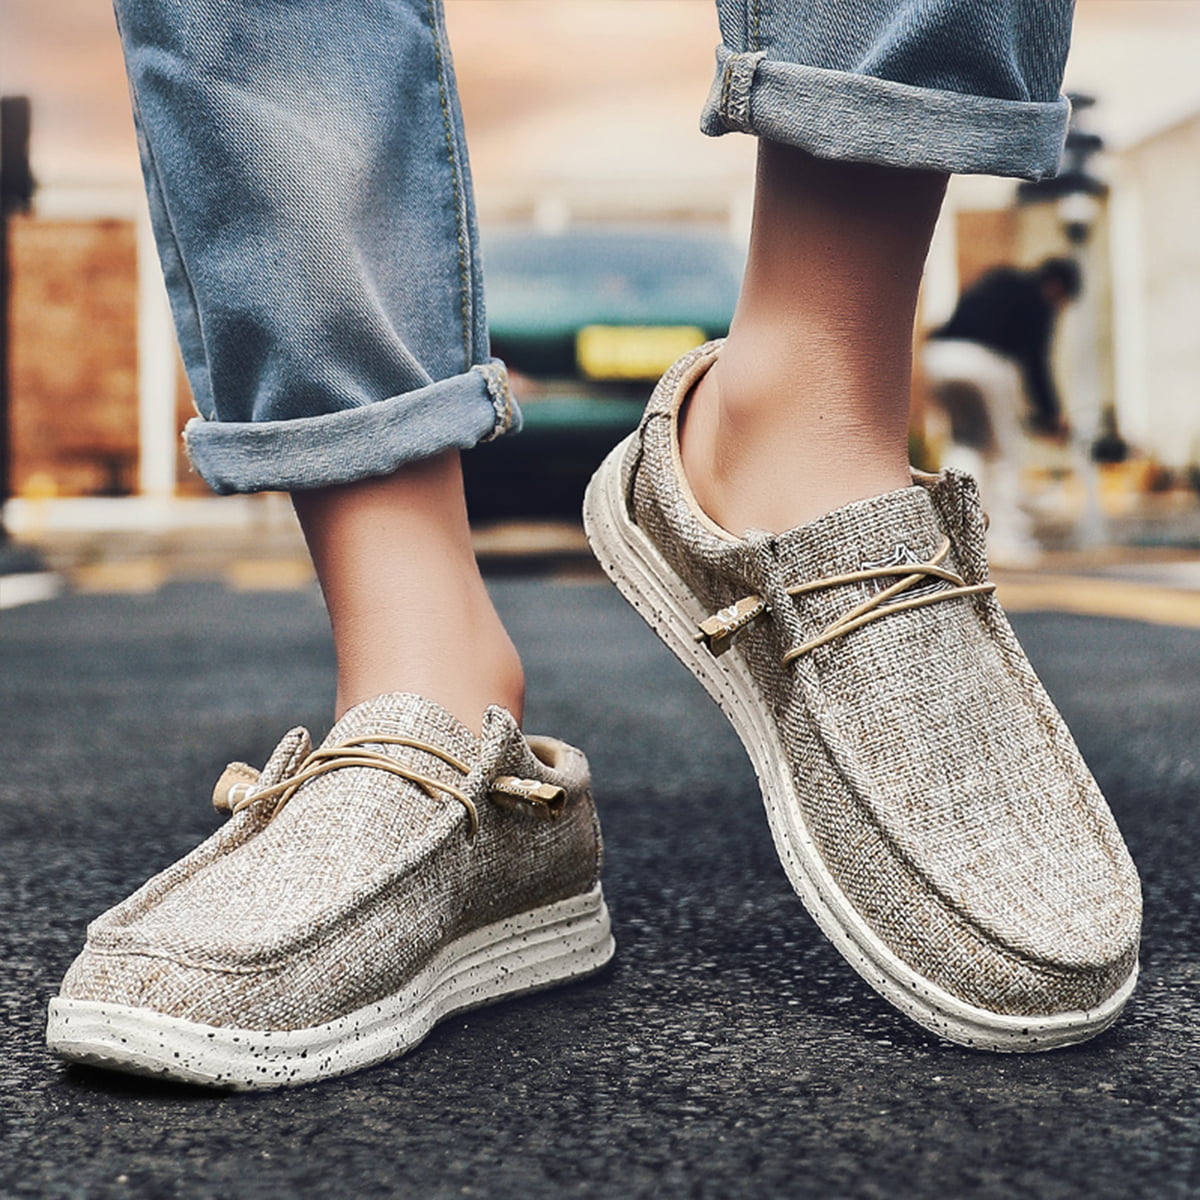 Mens Casual Sneaker Rock Music Band Album Slip-on Loafer Flat Comfort Walking Shoes